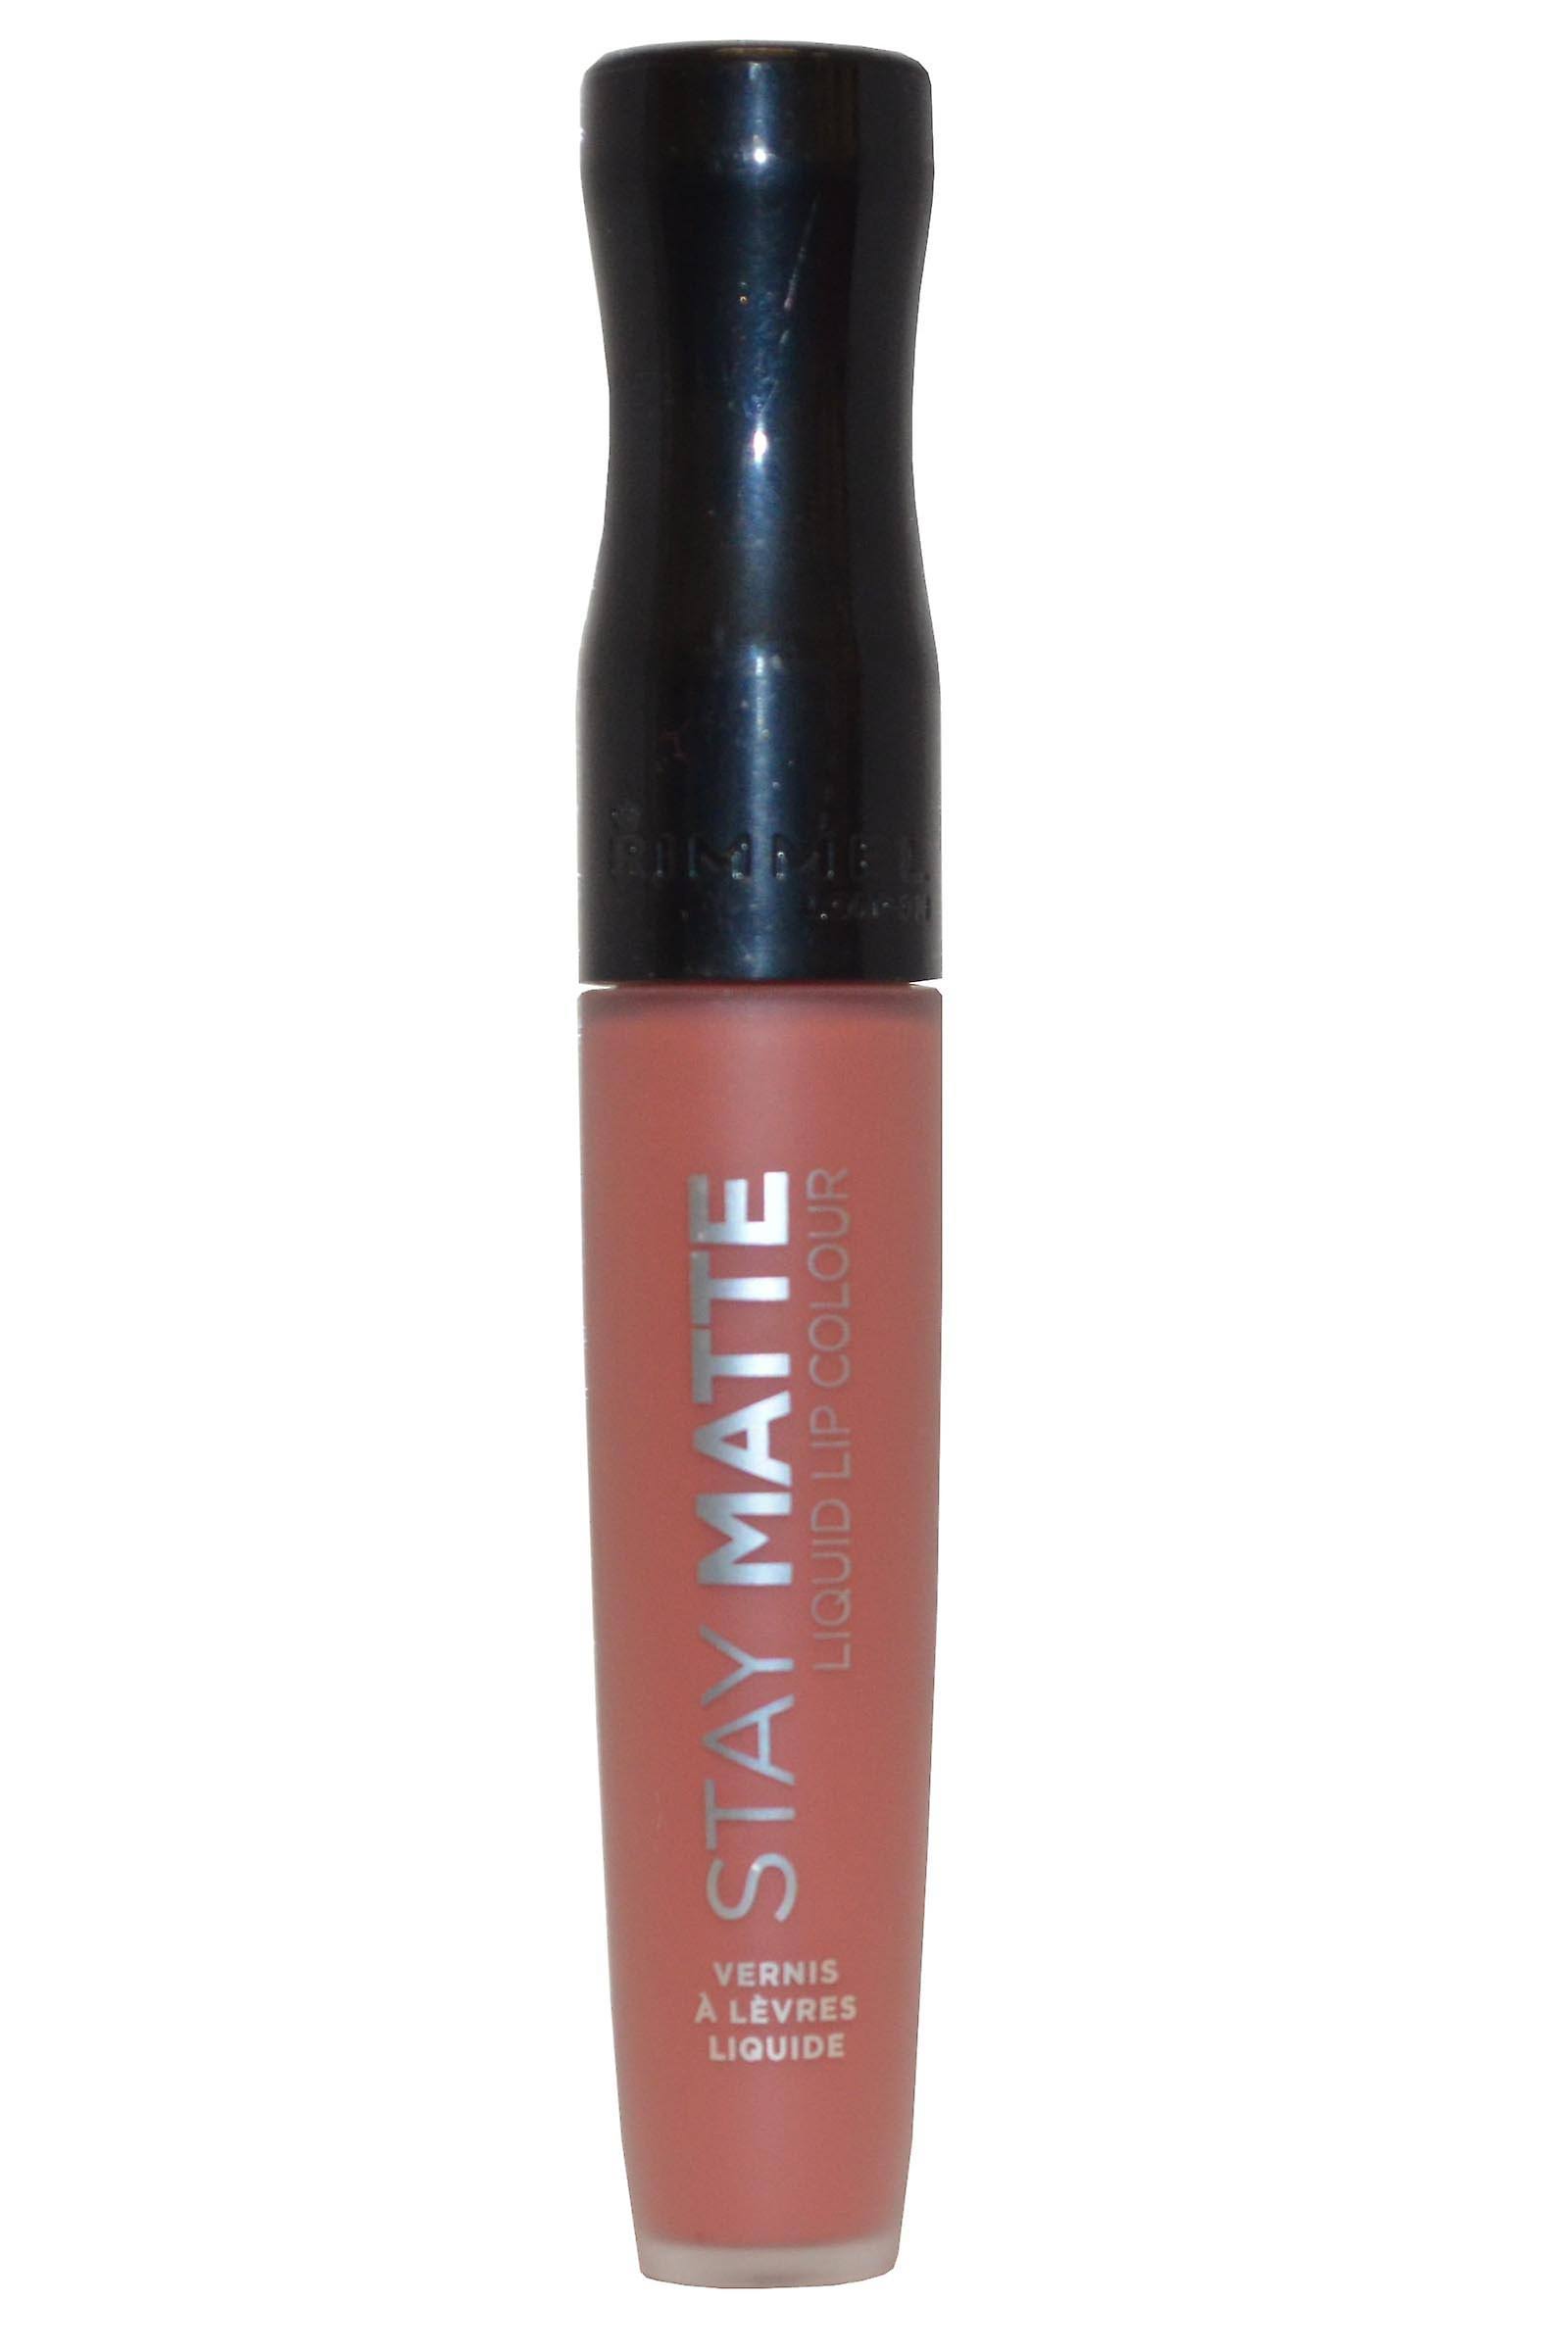 Rimmel London Stay Matte Liquid Lip Colour - 200 Pink Blink, 5.5ml